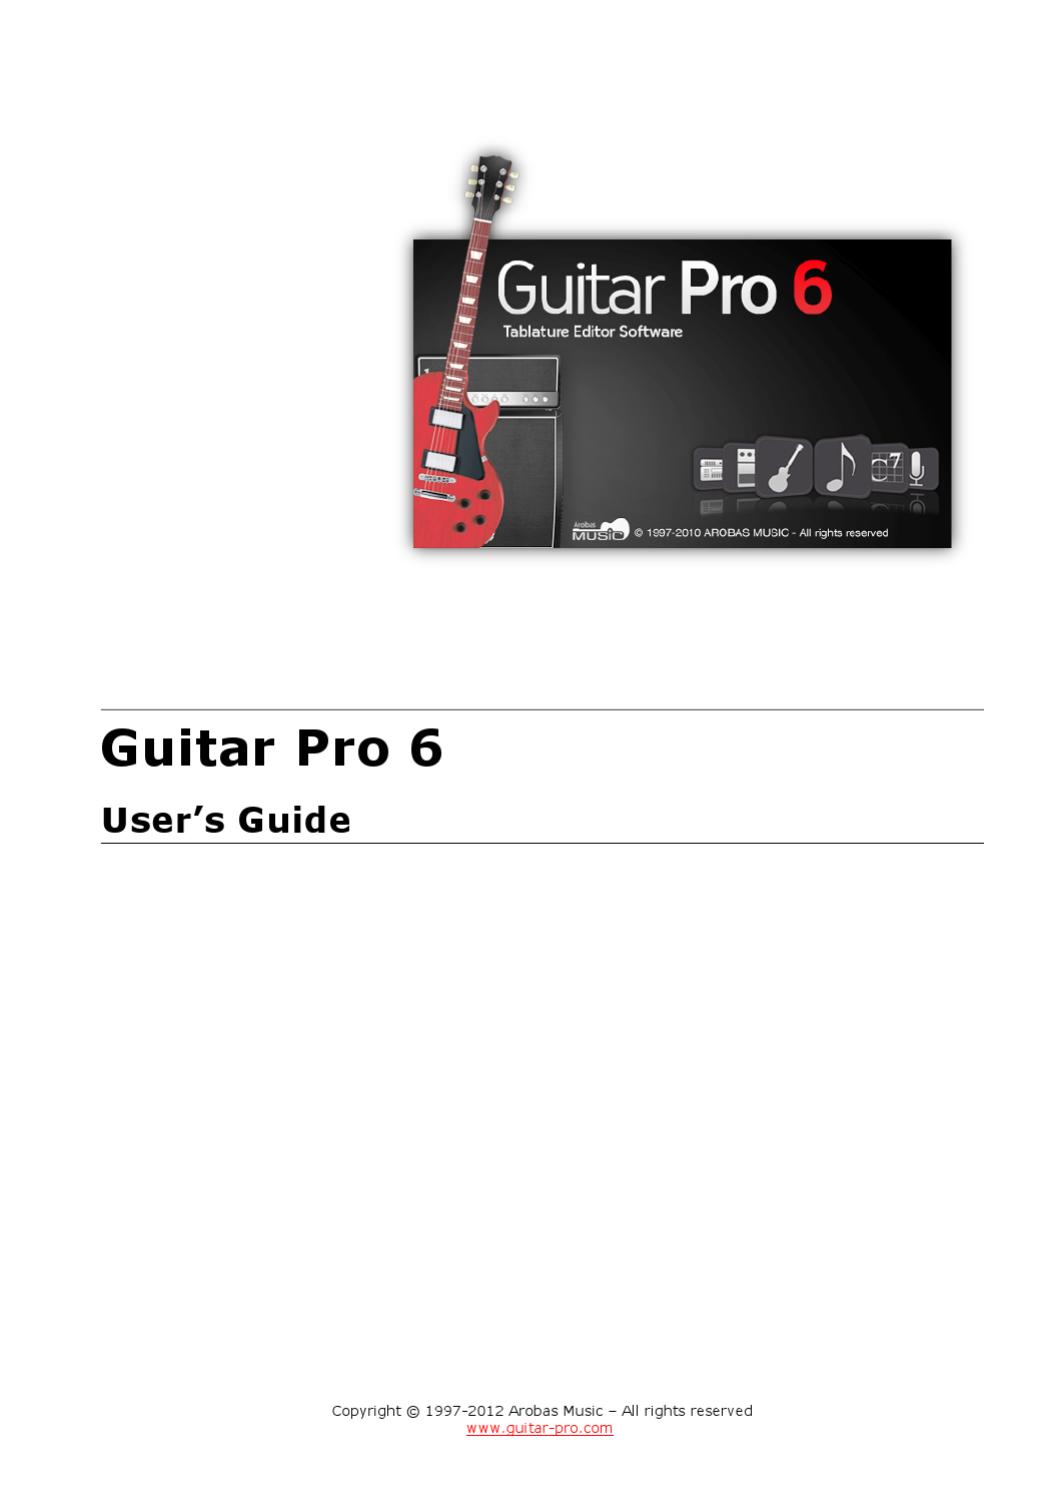 download guitar pro 6 mac free full version